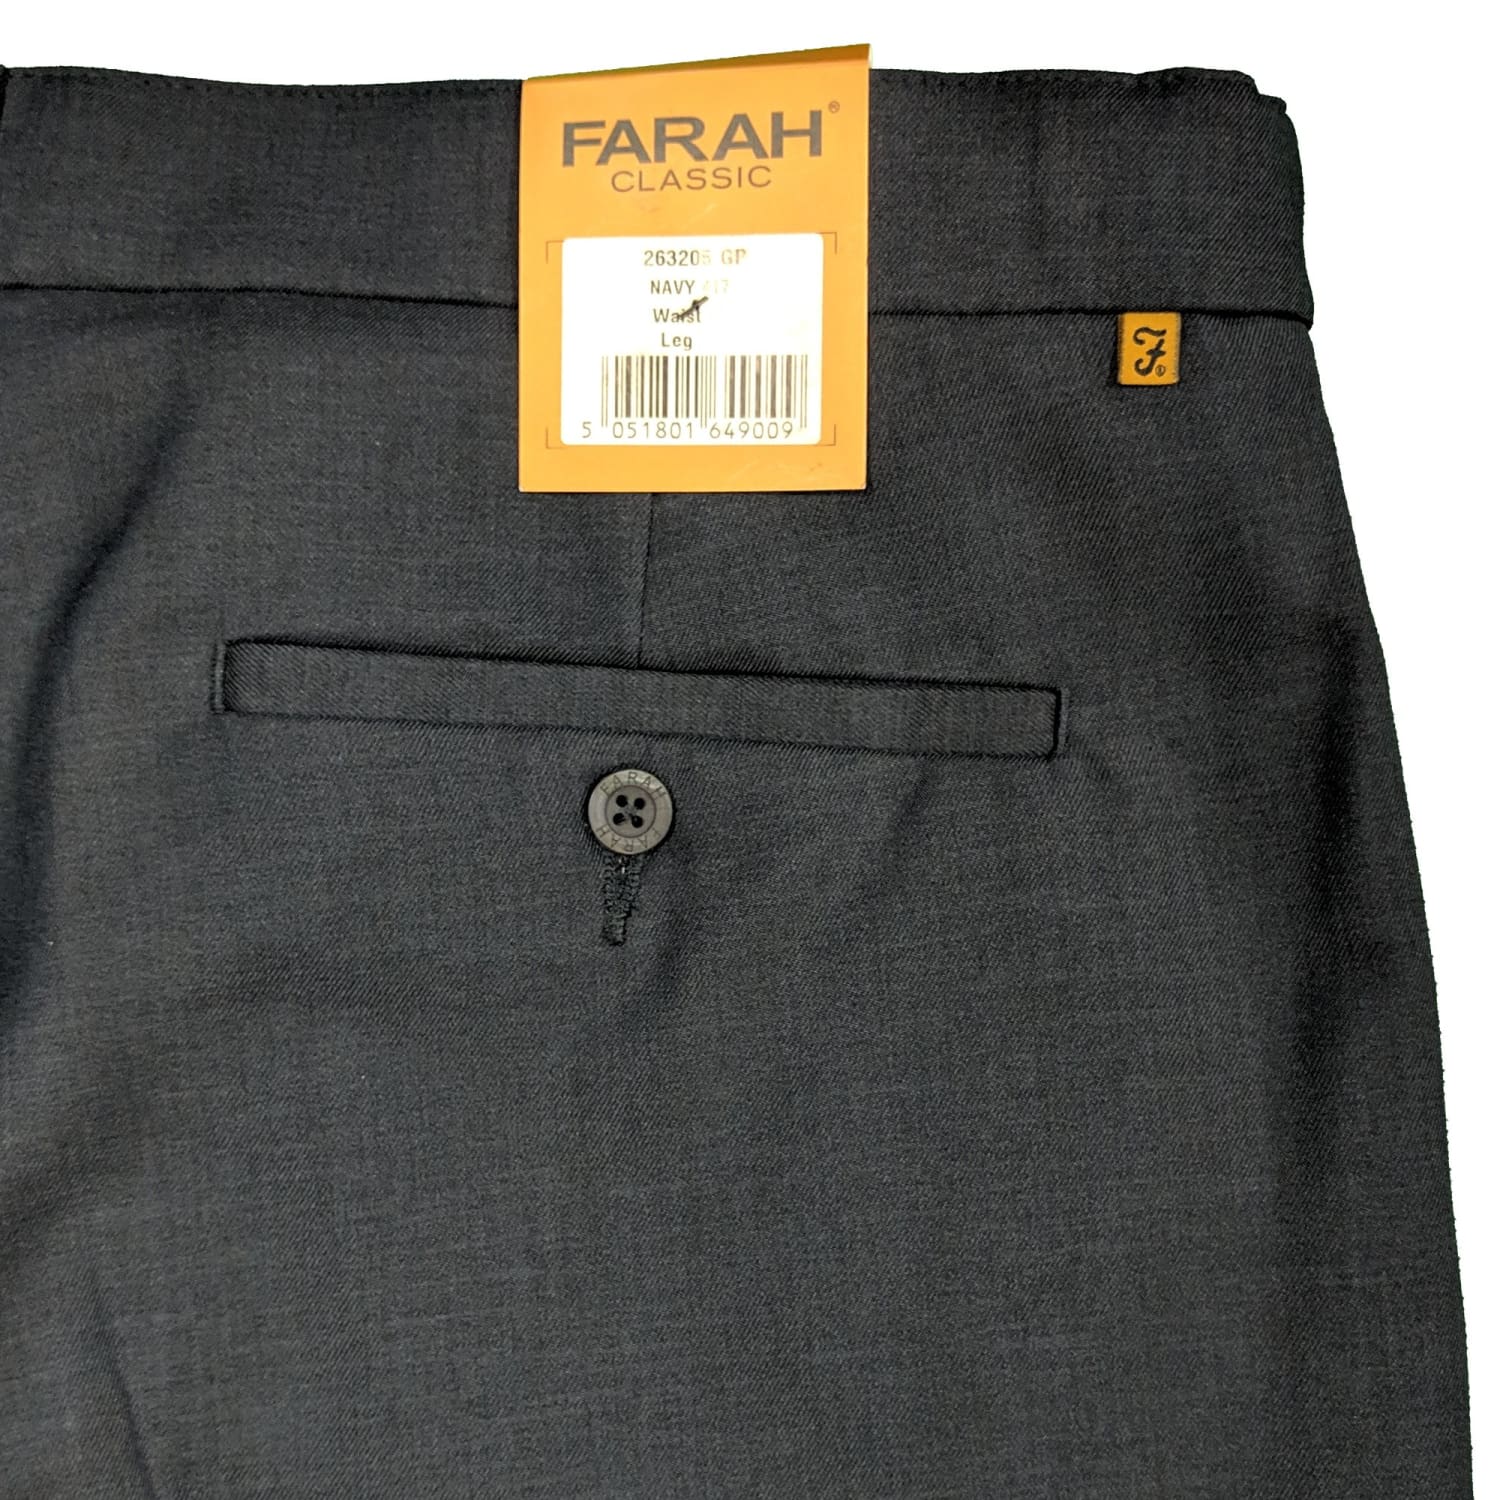 farah trousers 263205 navy 1 back pocket 2 front pockets 42 44